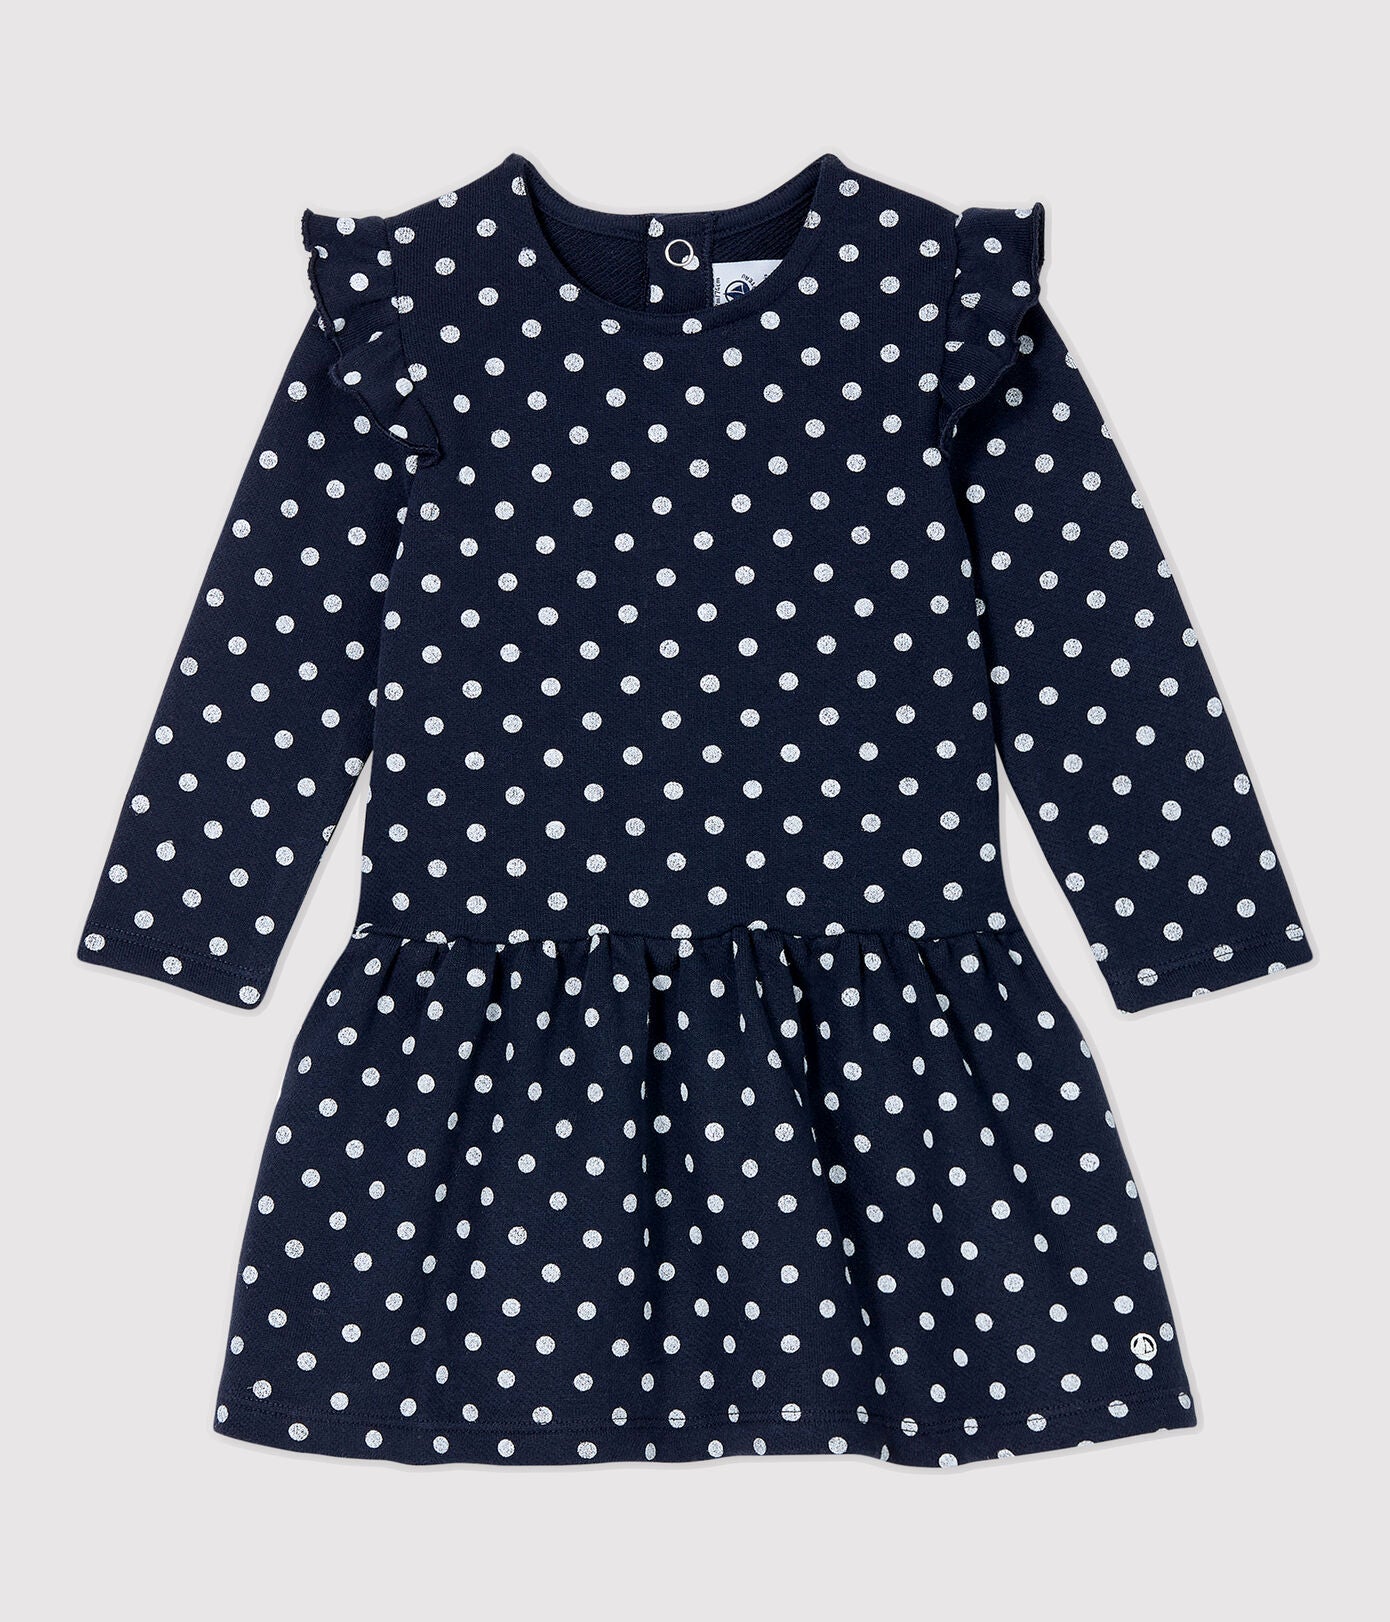 Baby Girls Navy Dots Cotton Dress